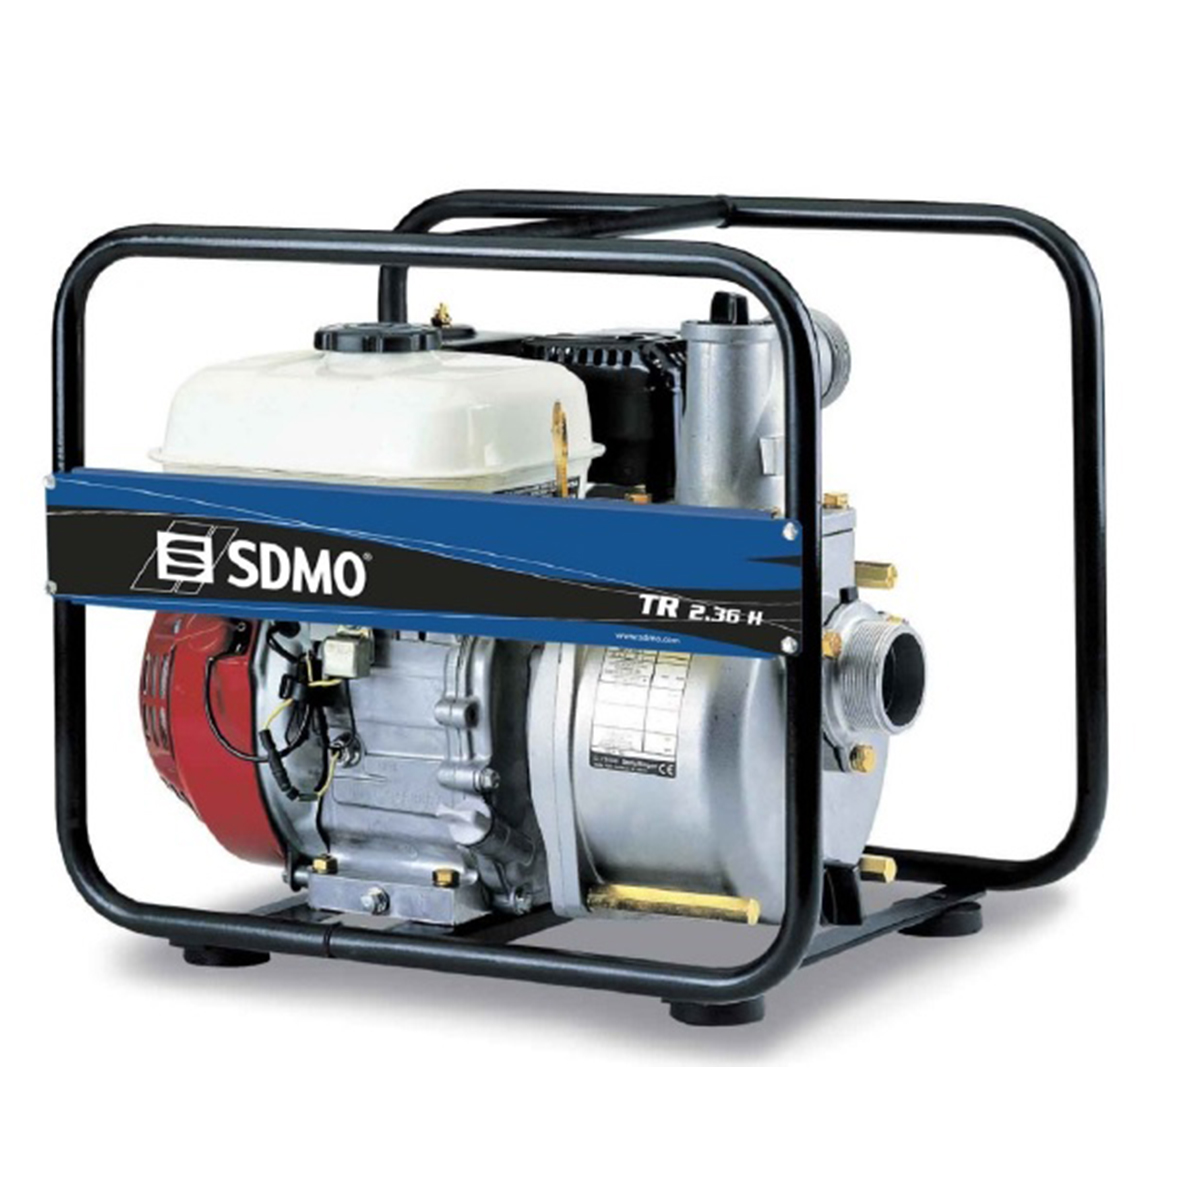 SDMO TR2-36H Semi-Trash Petrol Water Pump